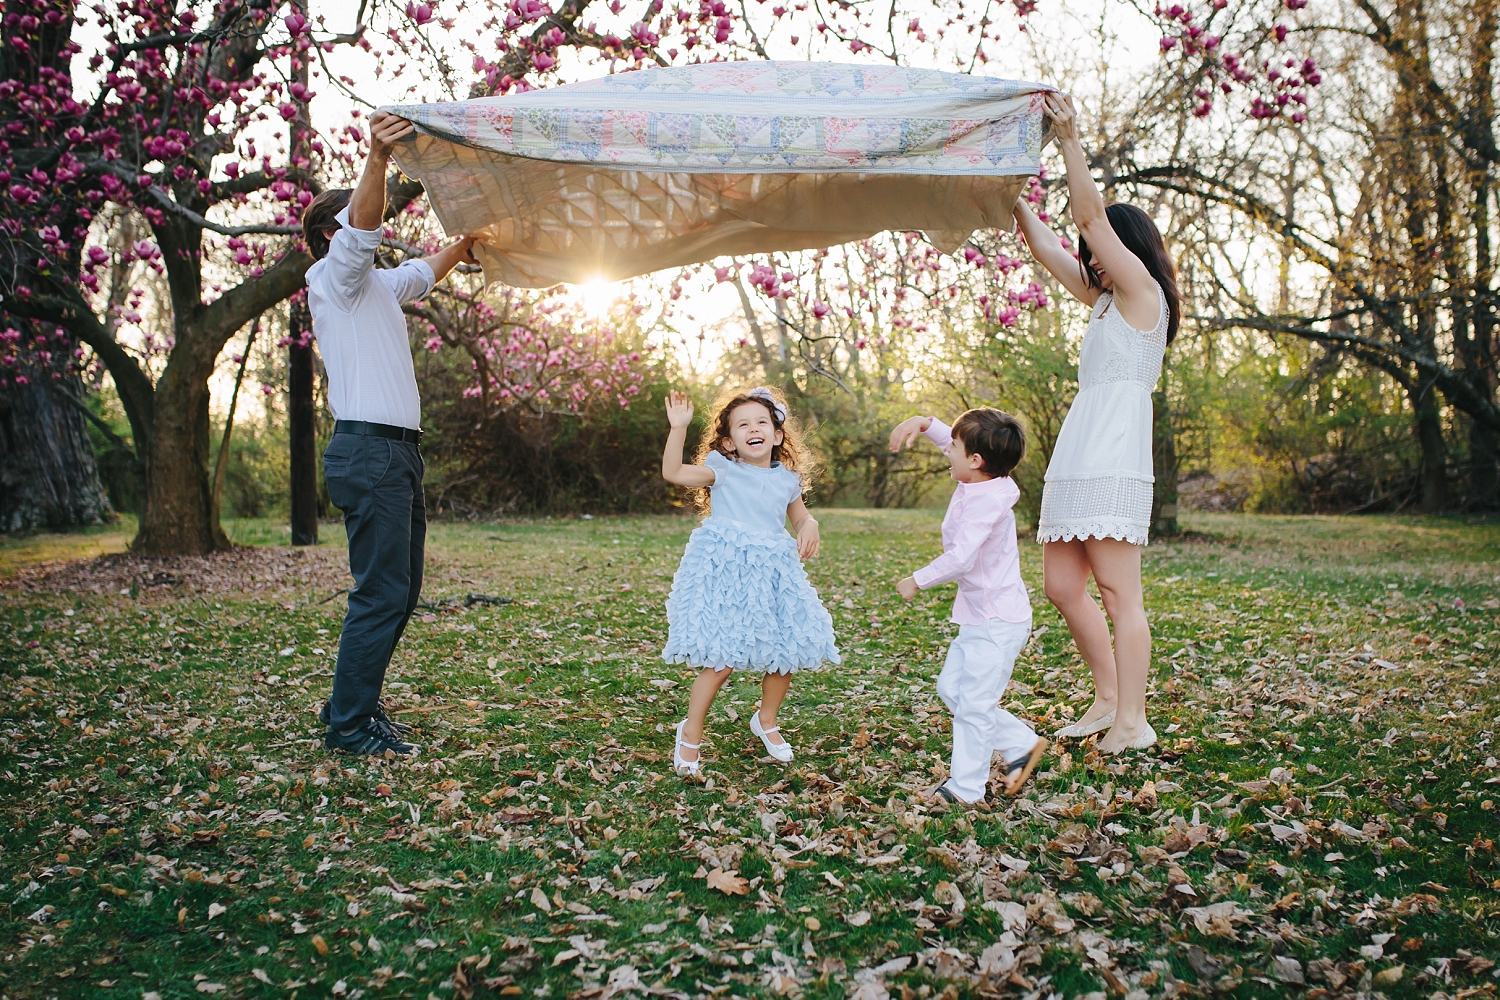 Spring Blossom Family Photo Session | Tonya Teran Photography, Bethesda, MD Newborn, Baby, and Family Photographer